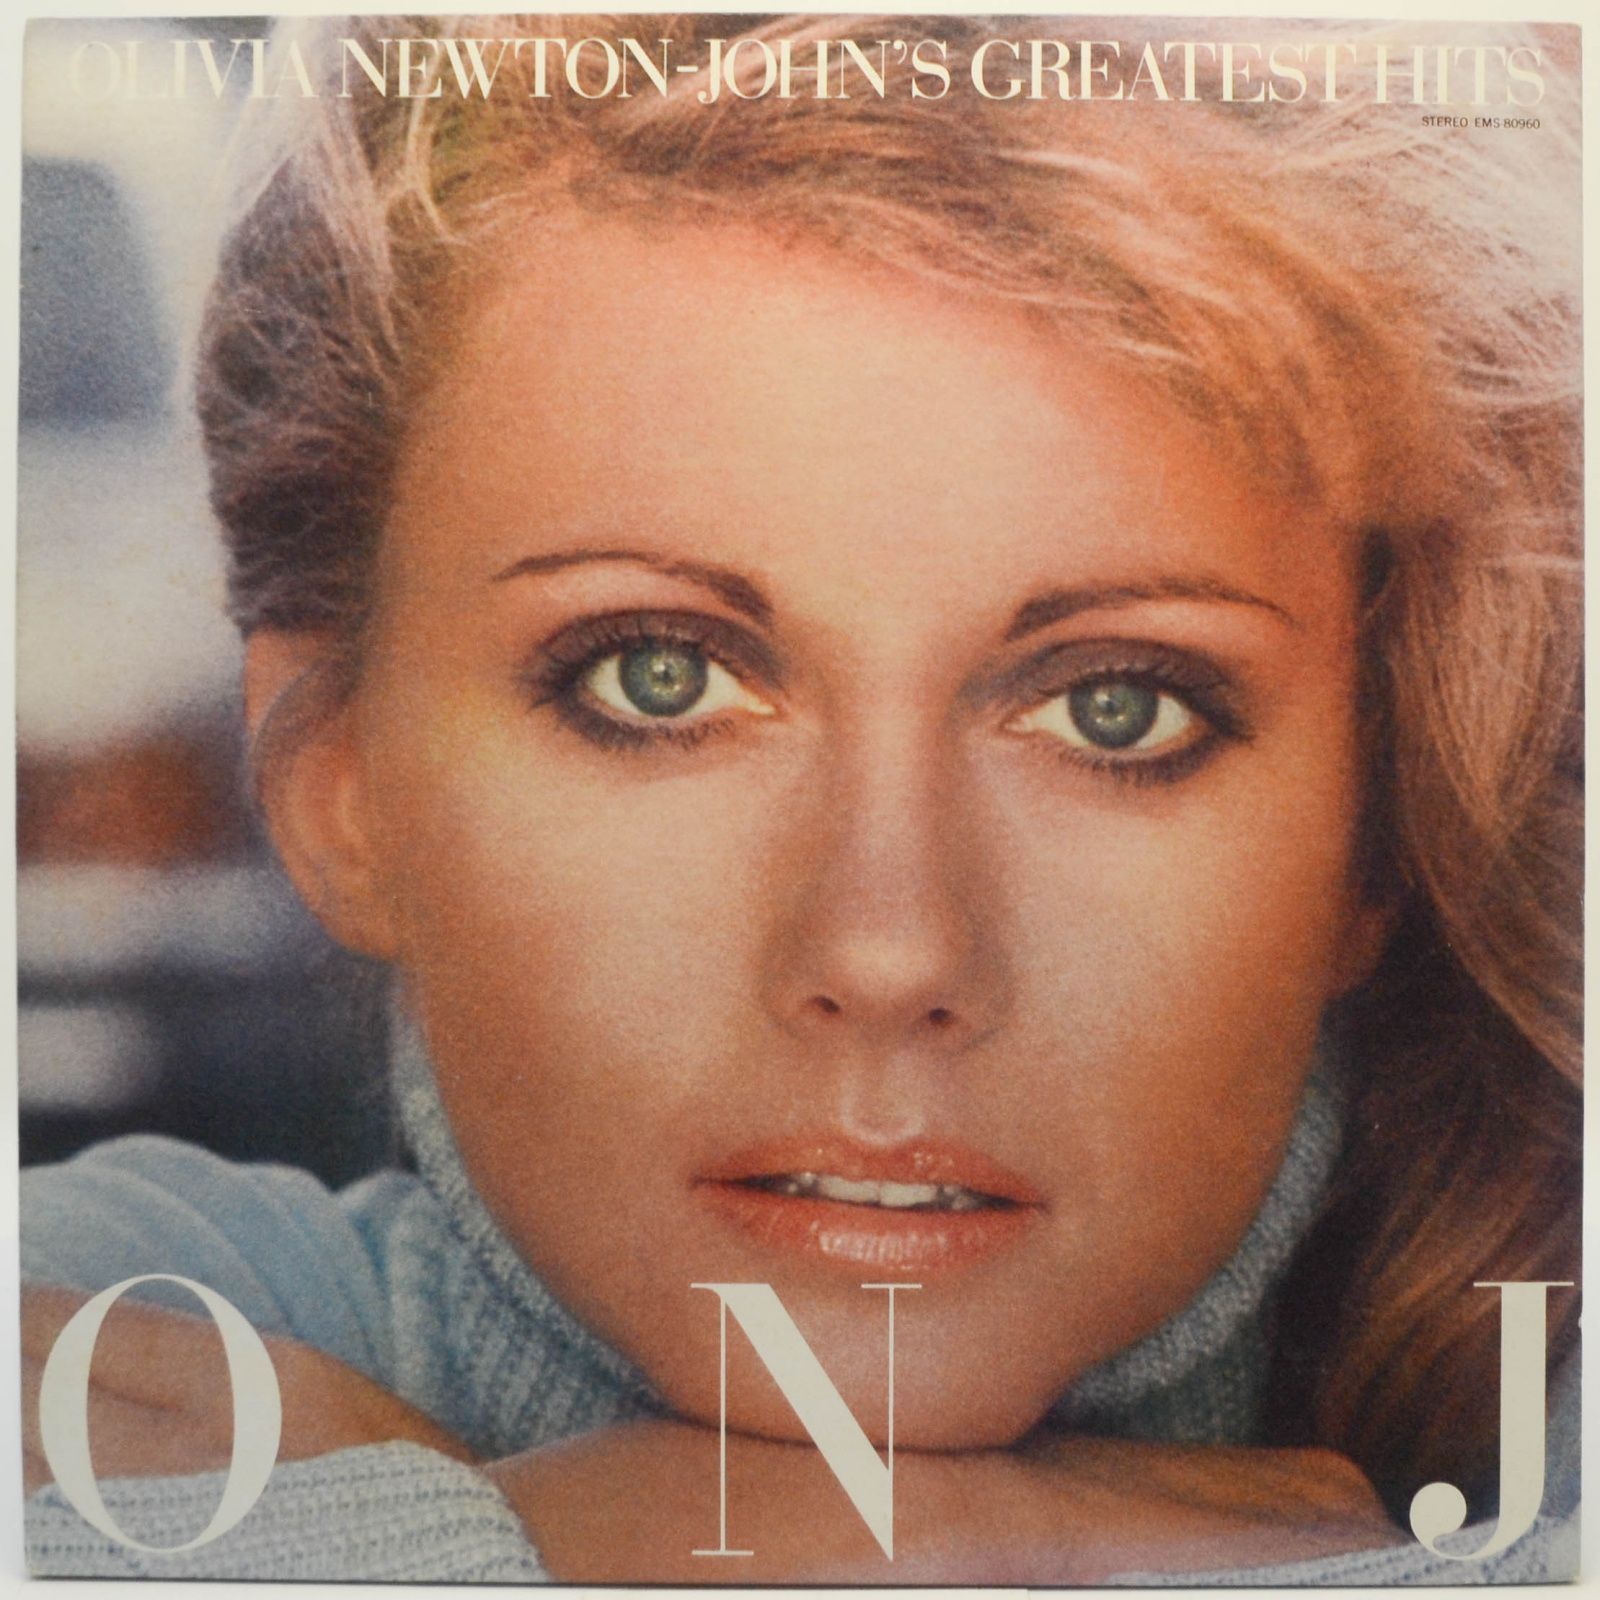 Olivia Newton-John's Greatest Hits, 1977